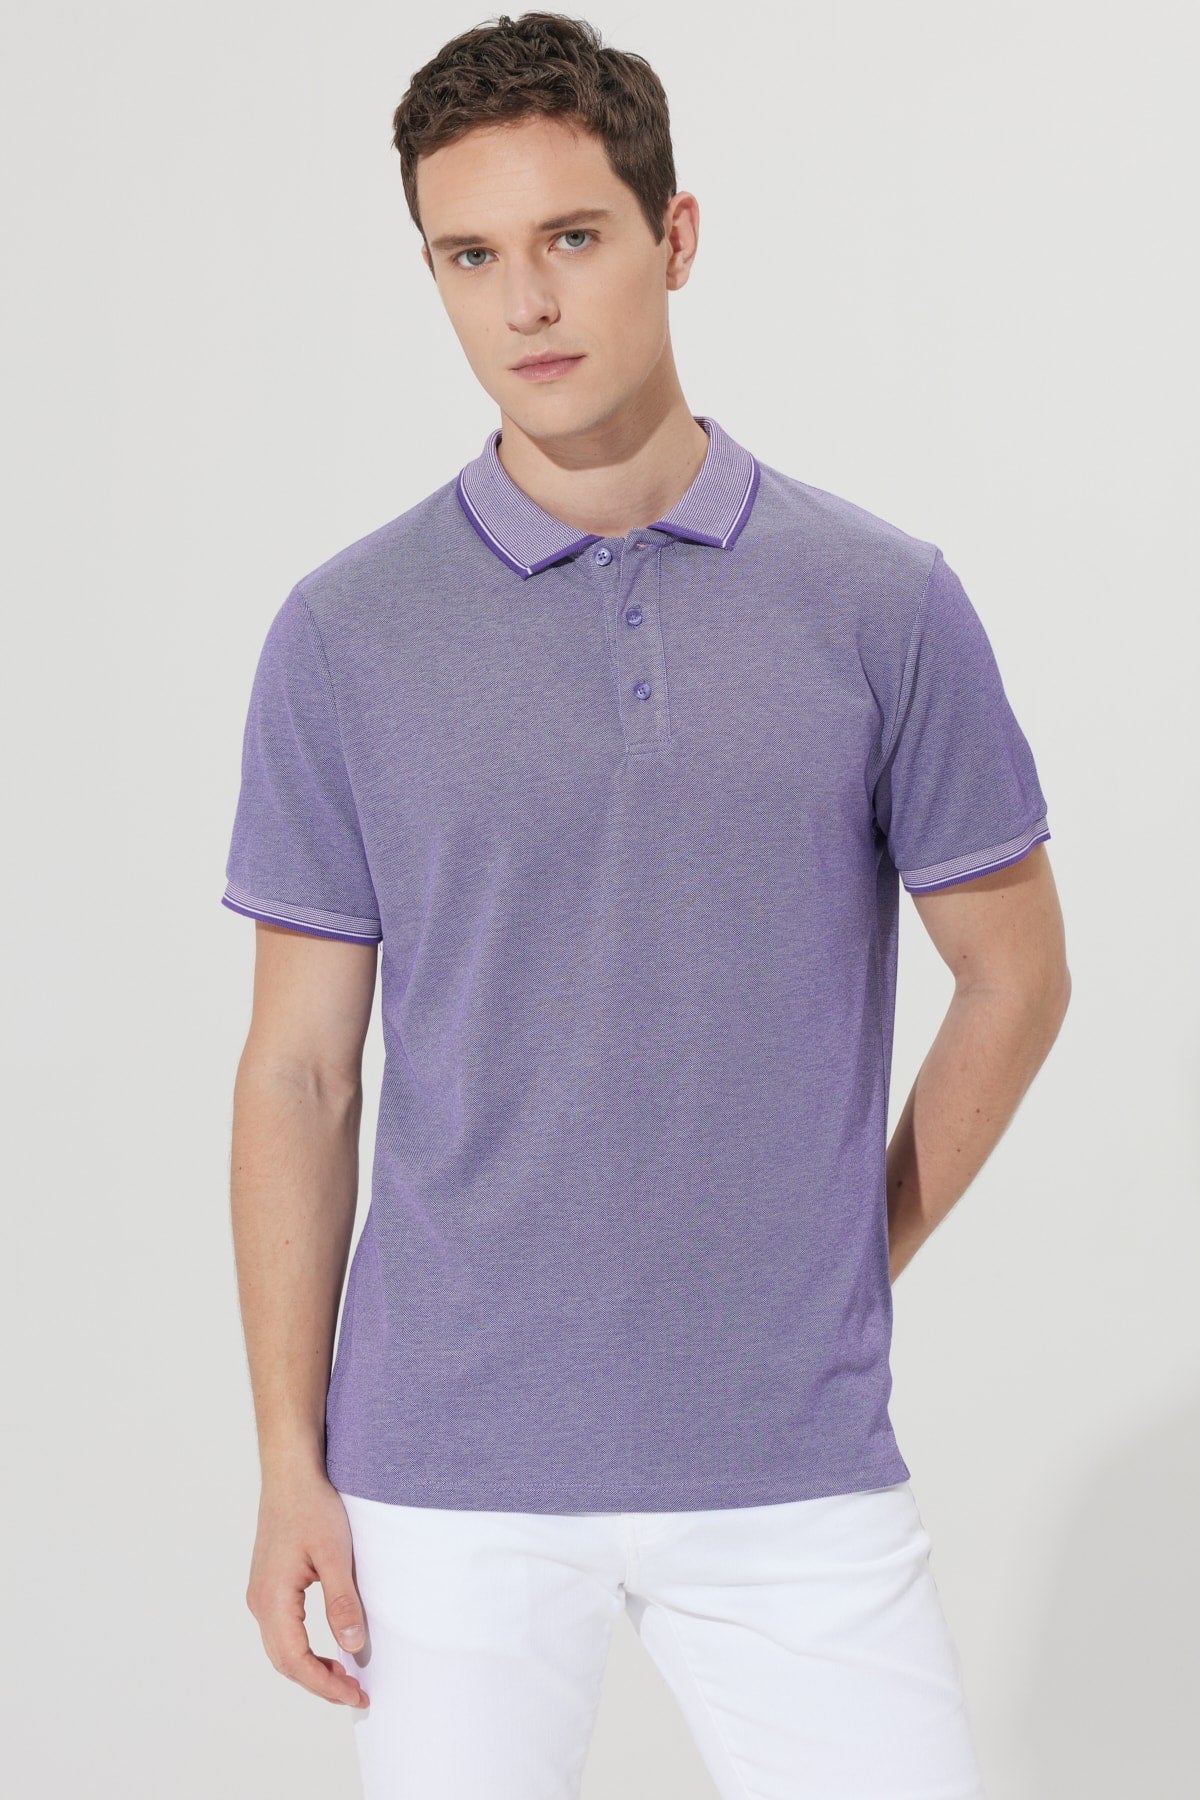 Men's Non-Shrink Cotton Fabric Slim Fit Slim Fit Purple-White Anti-roll Polo Neck T-Shirt